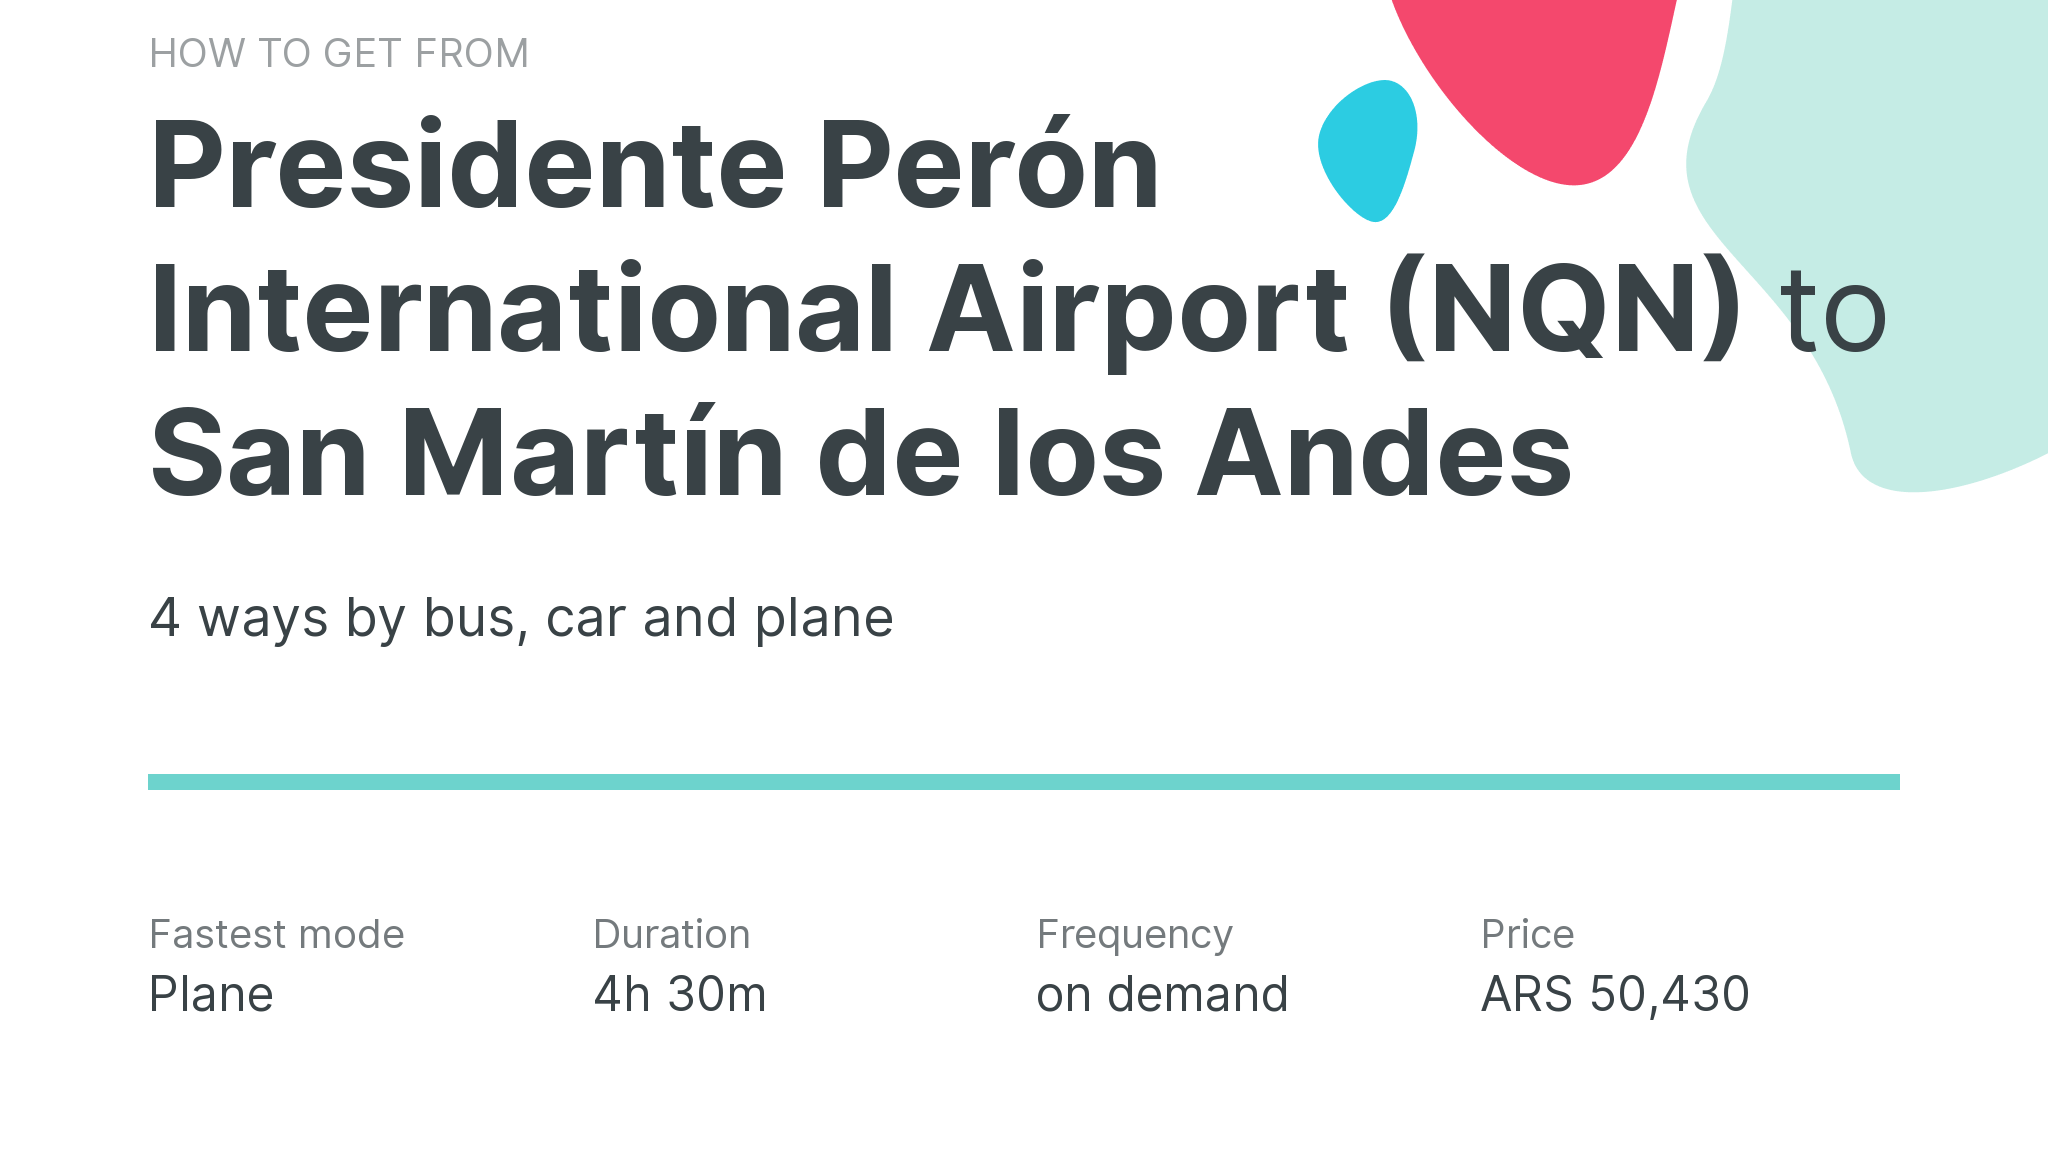 How do I get from Presidente Perón International Airport (NQN) to San Martín de los Andes